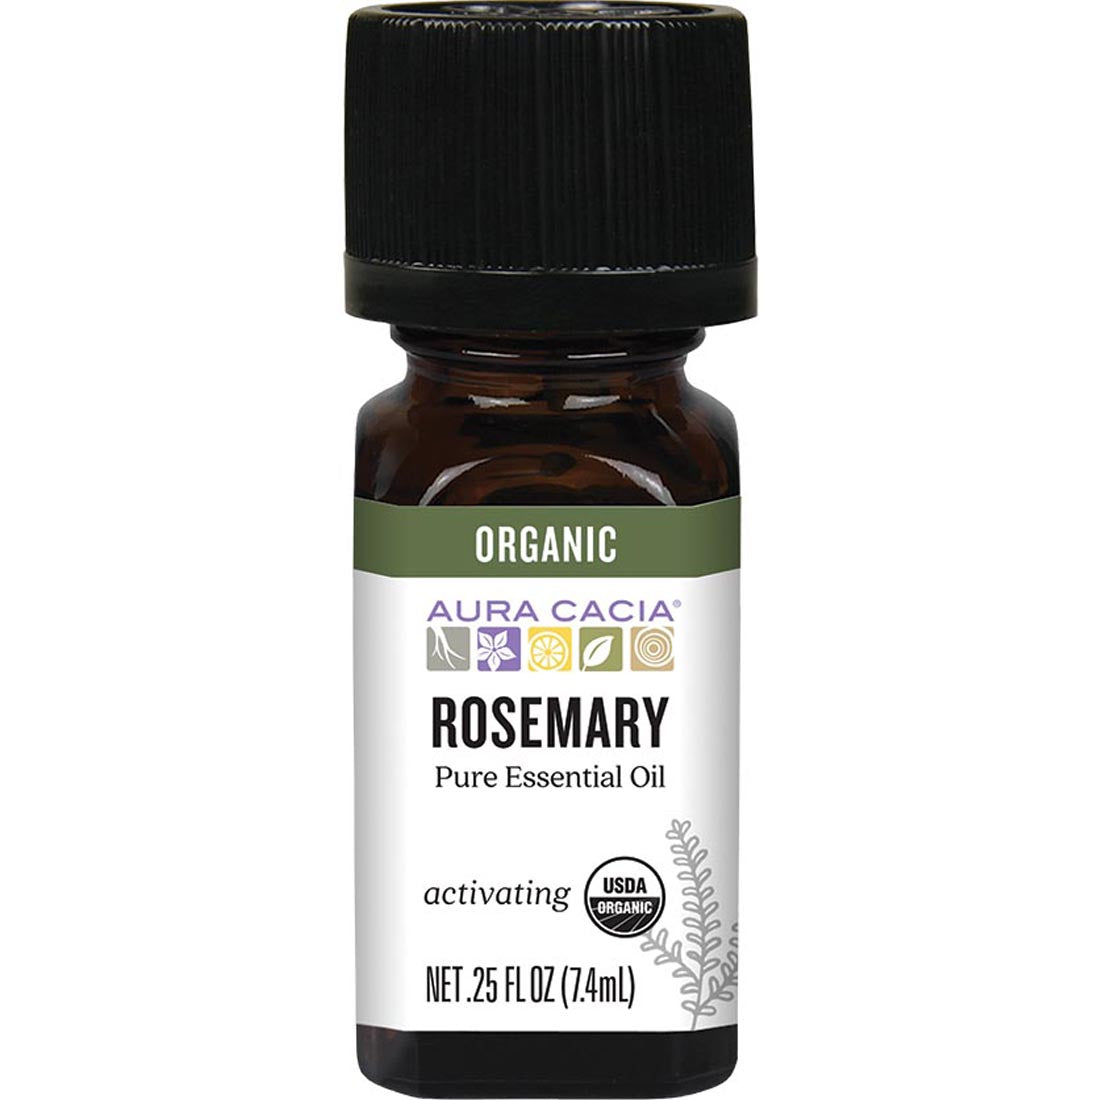 Aura Cacia Rosemary Organic Essential Oil, 7ml